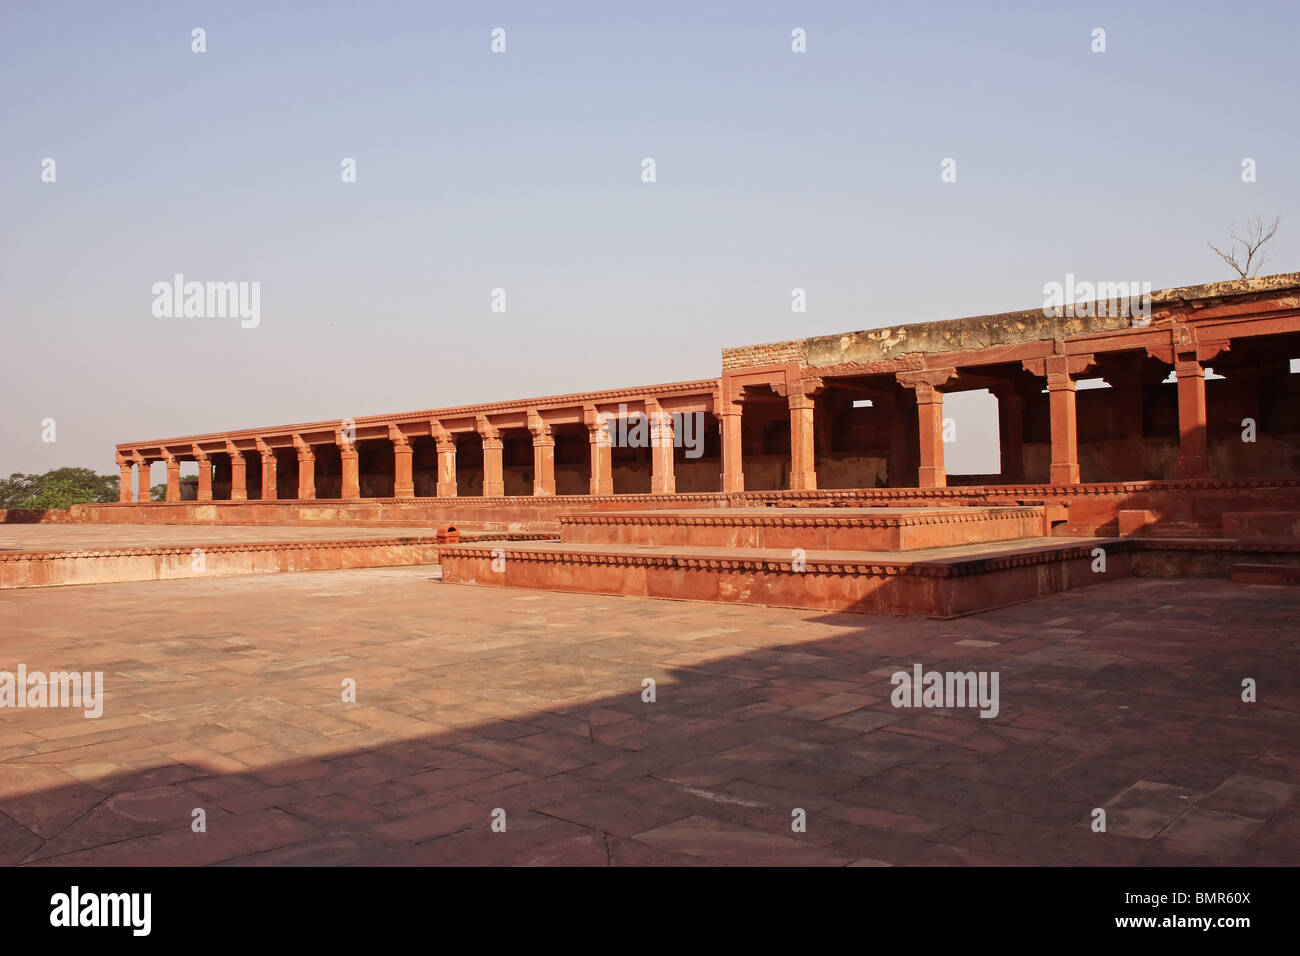 Fatehpur Sikri - Indian monument Mughal architecture -Palace of Akbar Stock Photo